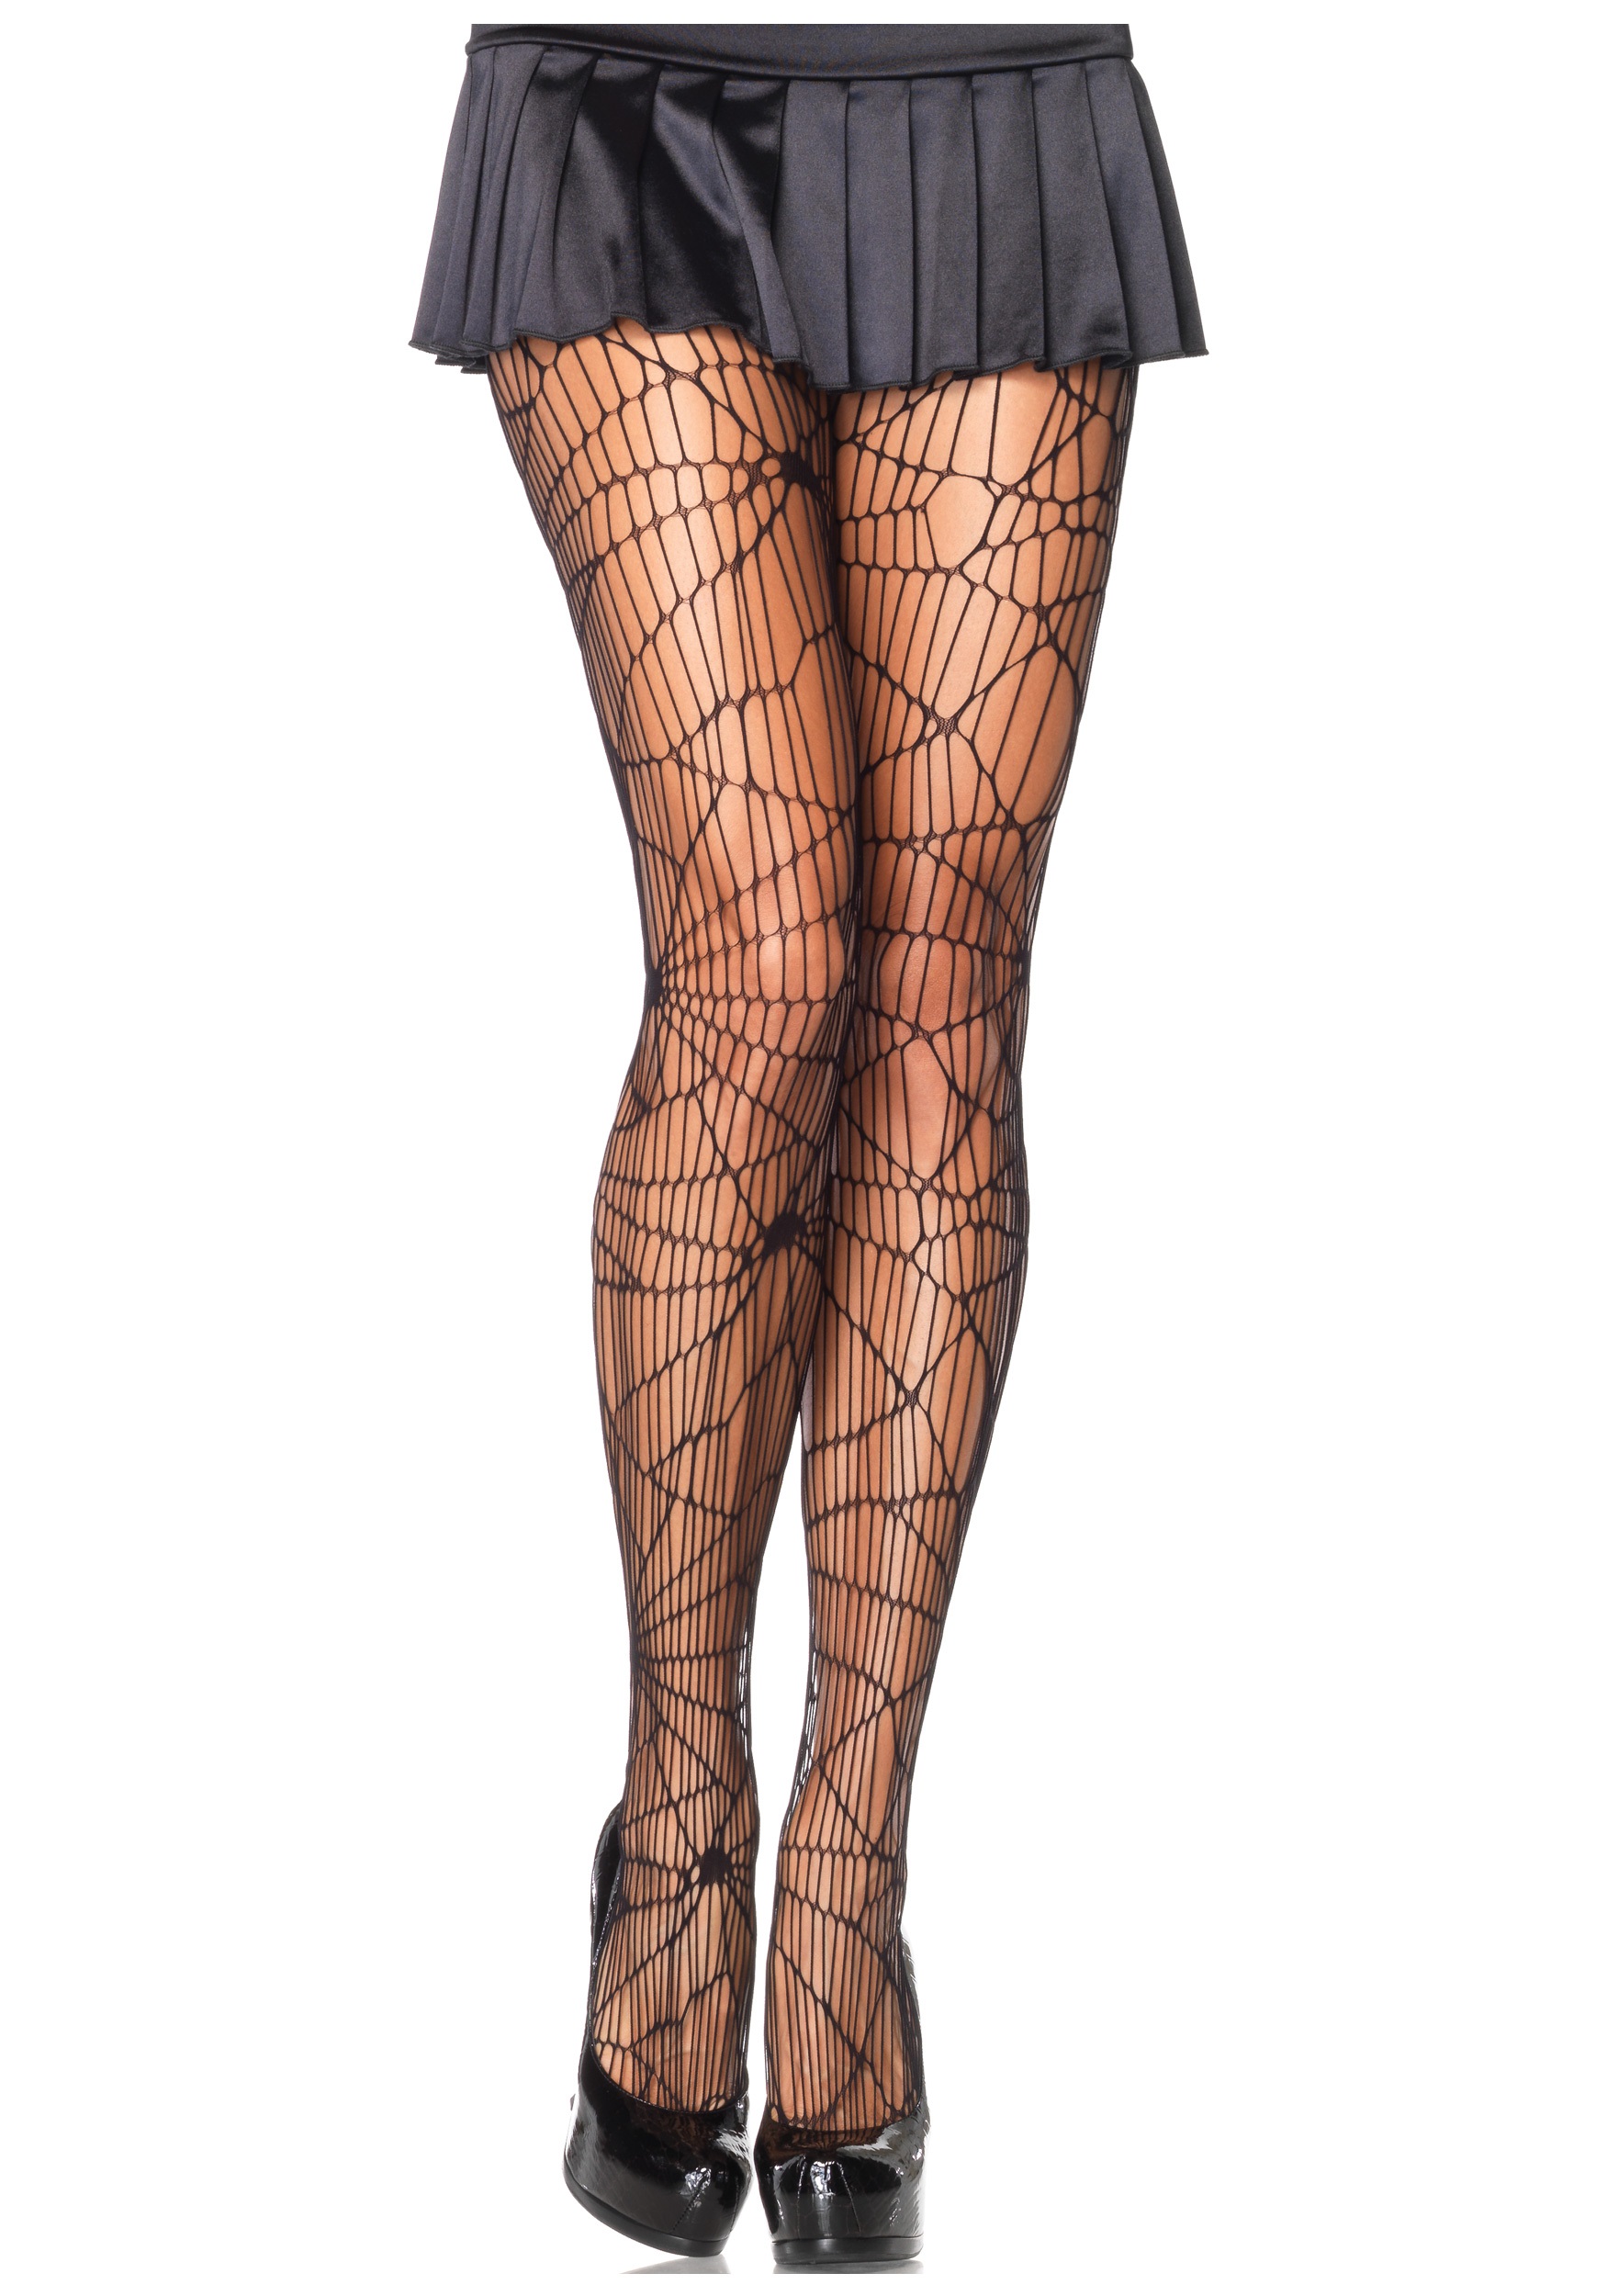 Women Spider Web Tights Halloween Fancy Dress Costume Pantyhose Stockings Cheap 